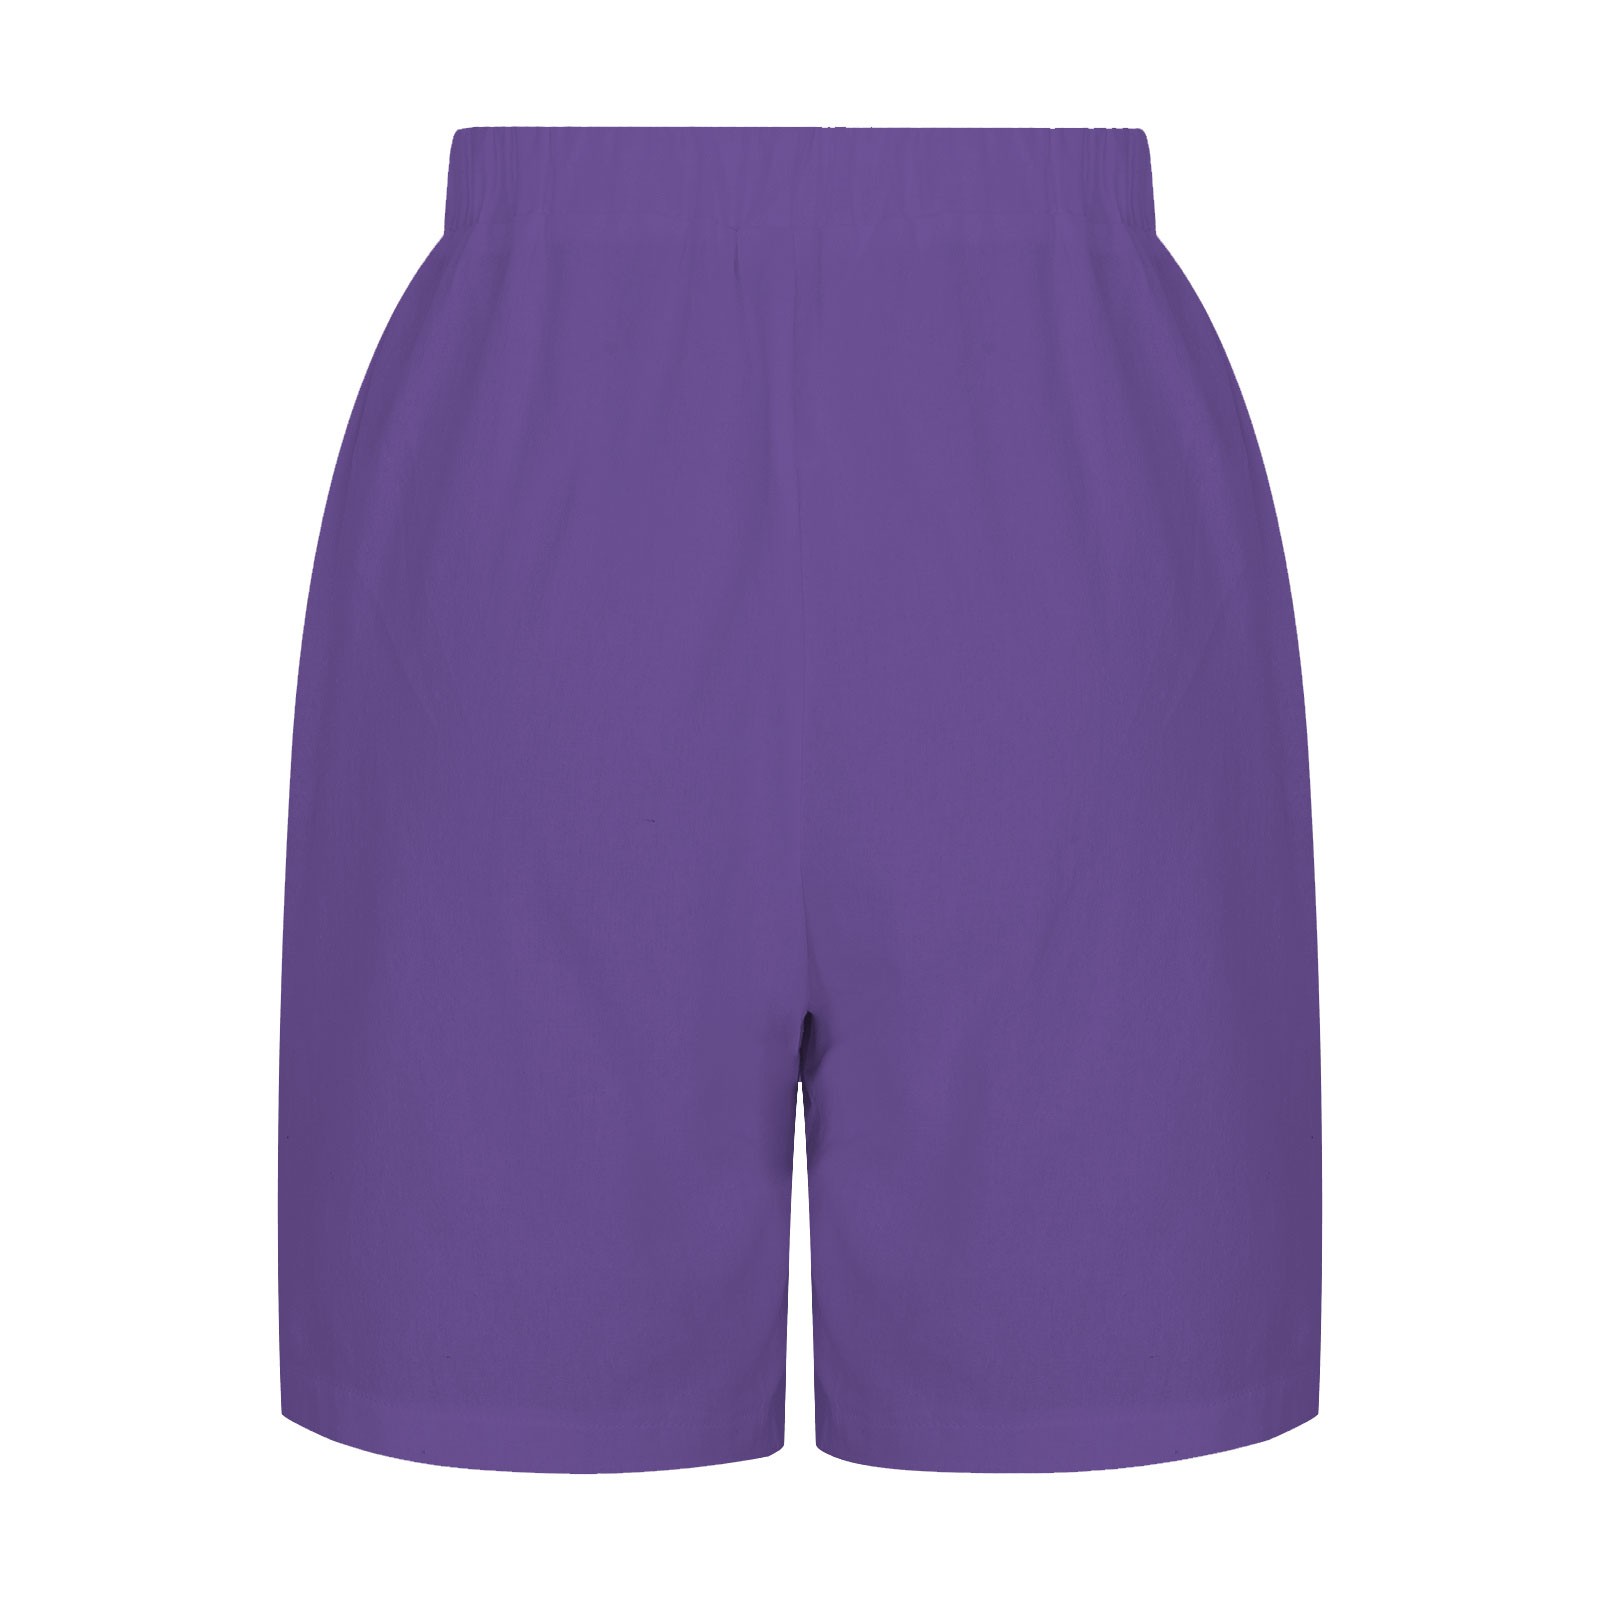 Njoeus Women's Cotton Linen Casual Shorts Drawstring Pull On Short ...